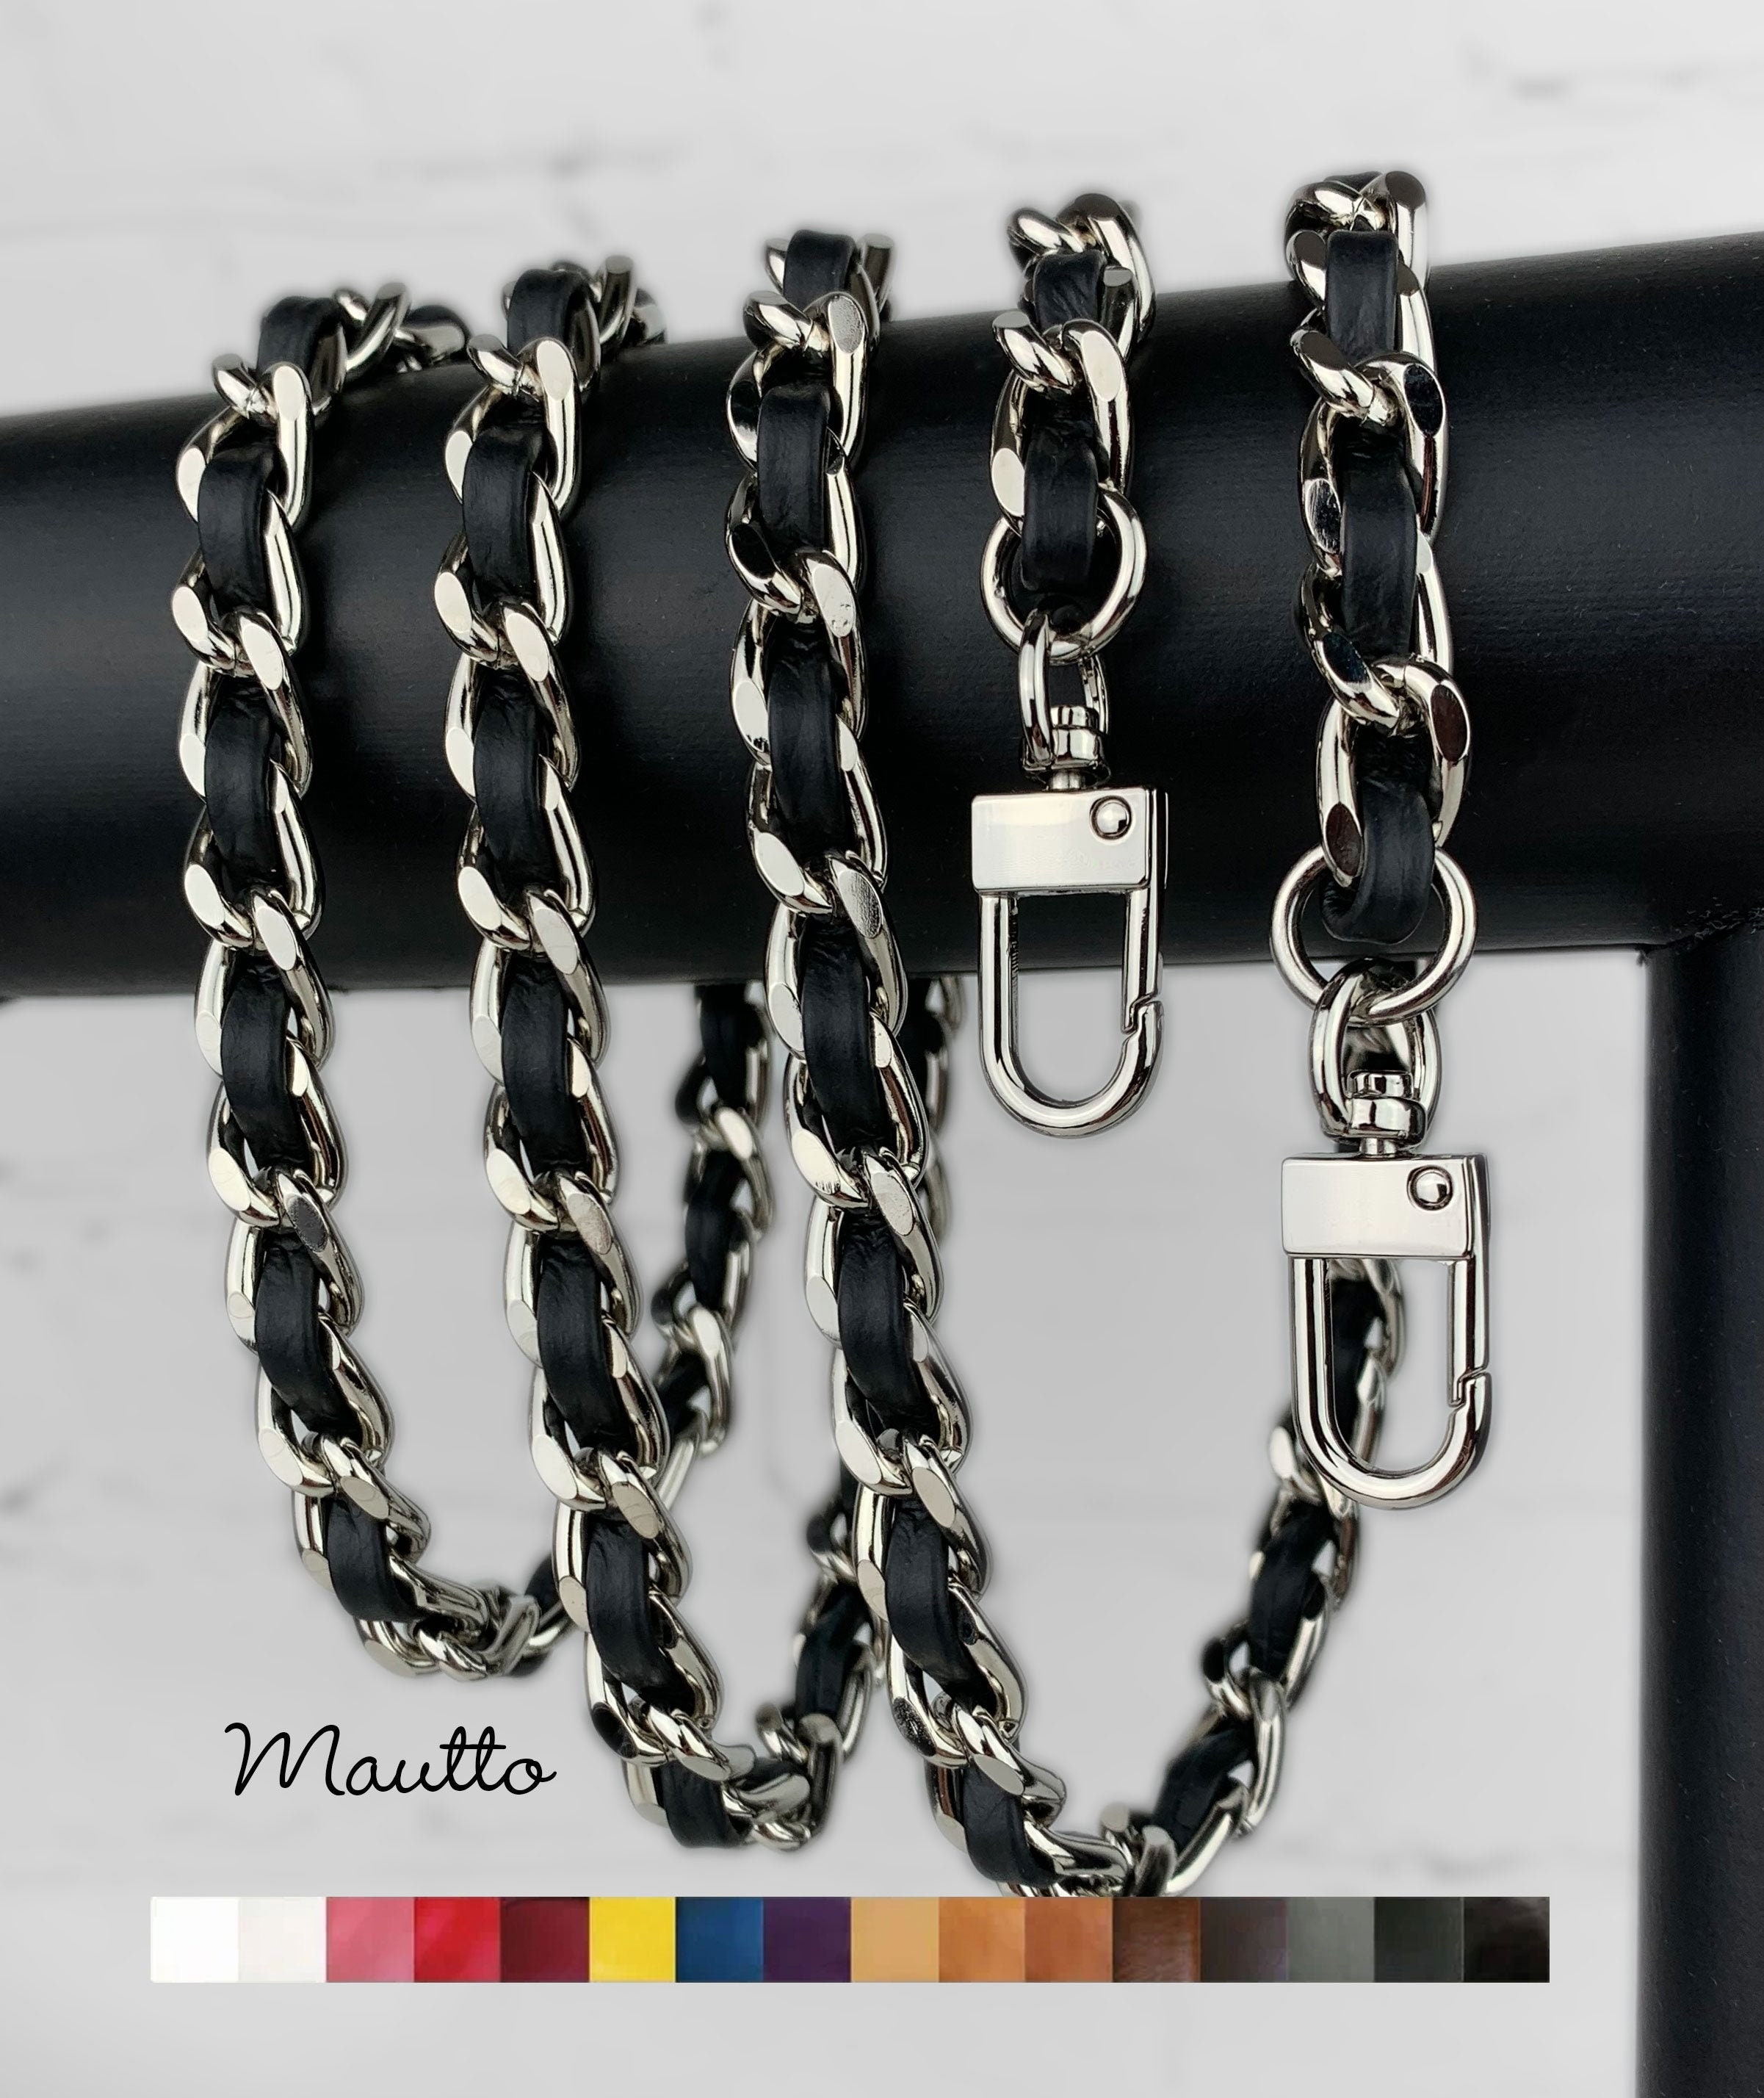 Mautto Black Leather Strap (13mm Petite Width) for LV Pochette, Alma, Eva Etc 60 Extra Long Crossbody / Silver-Tone